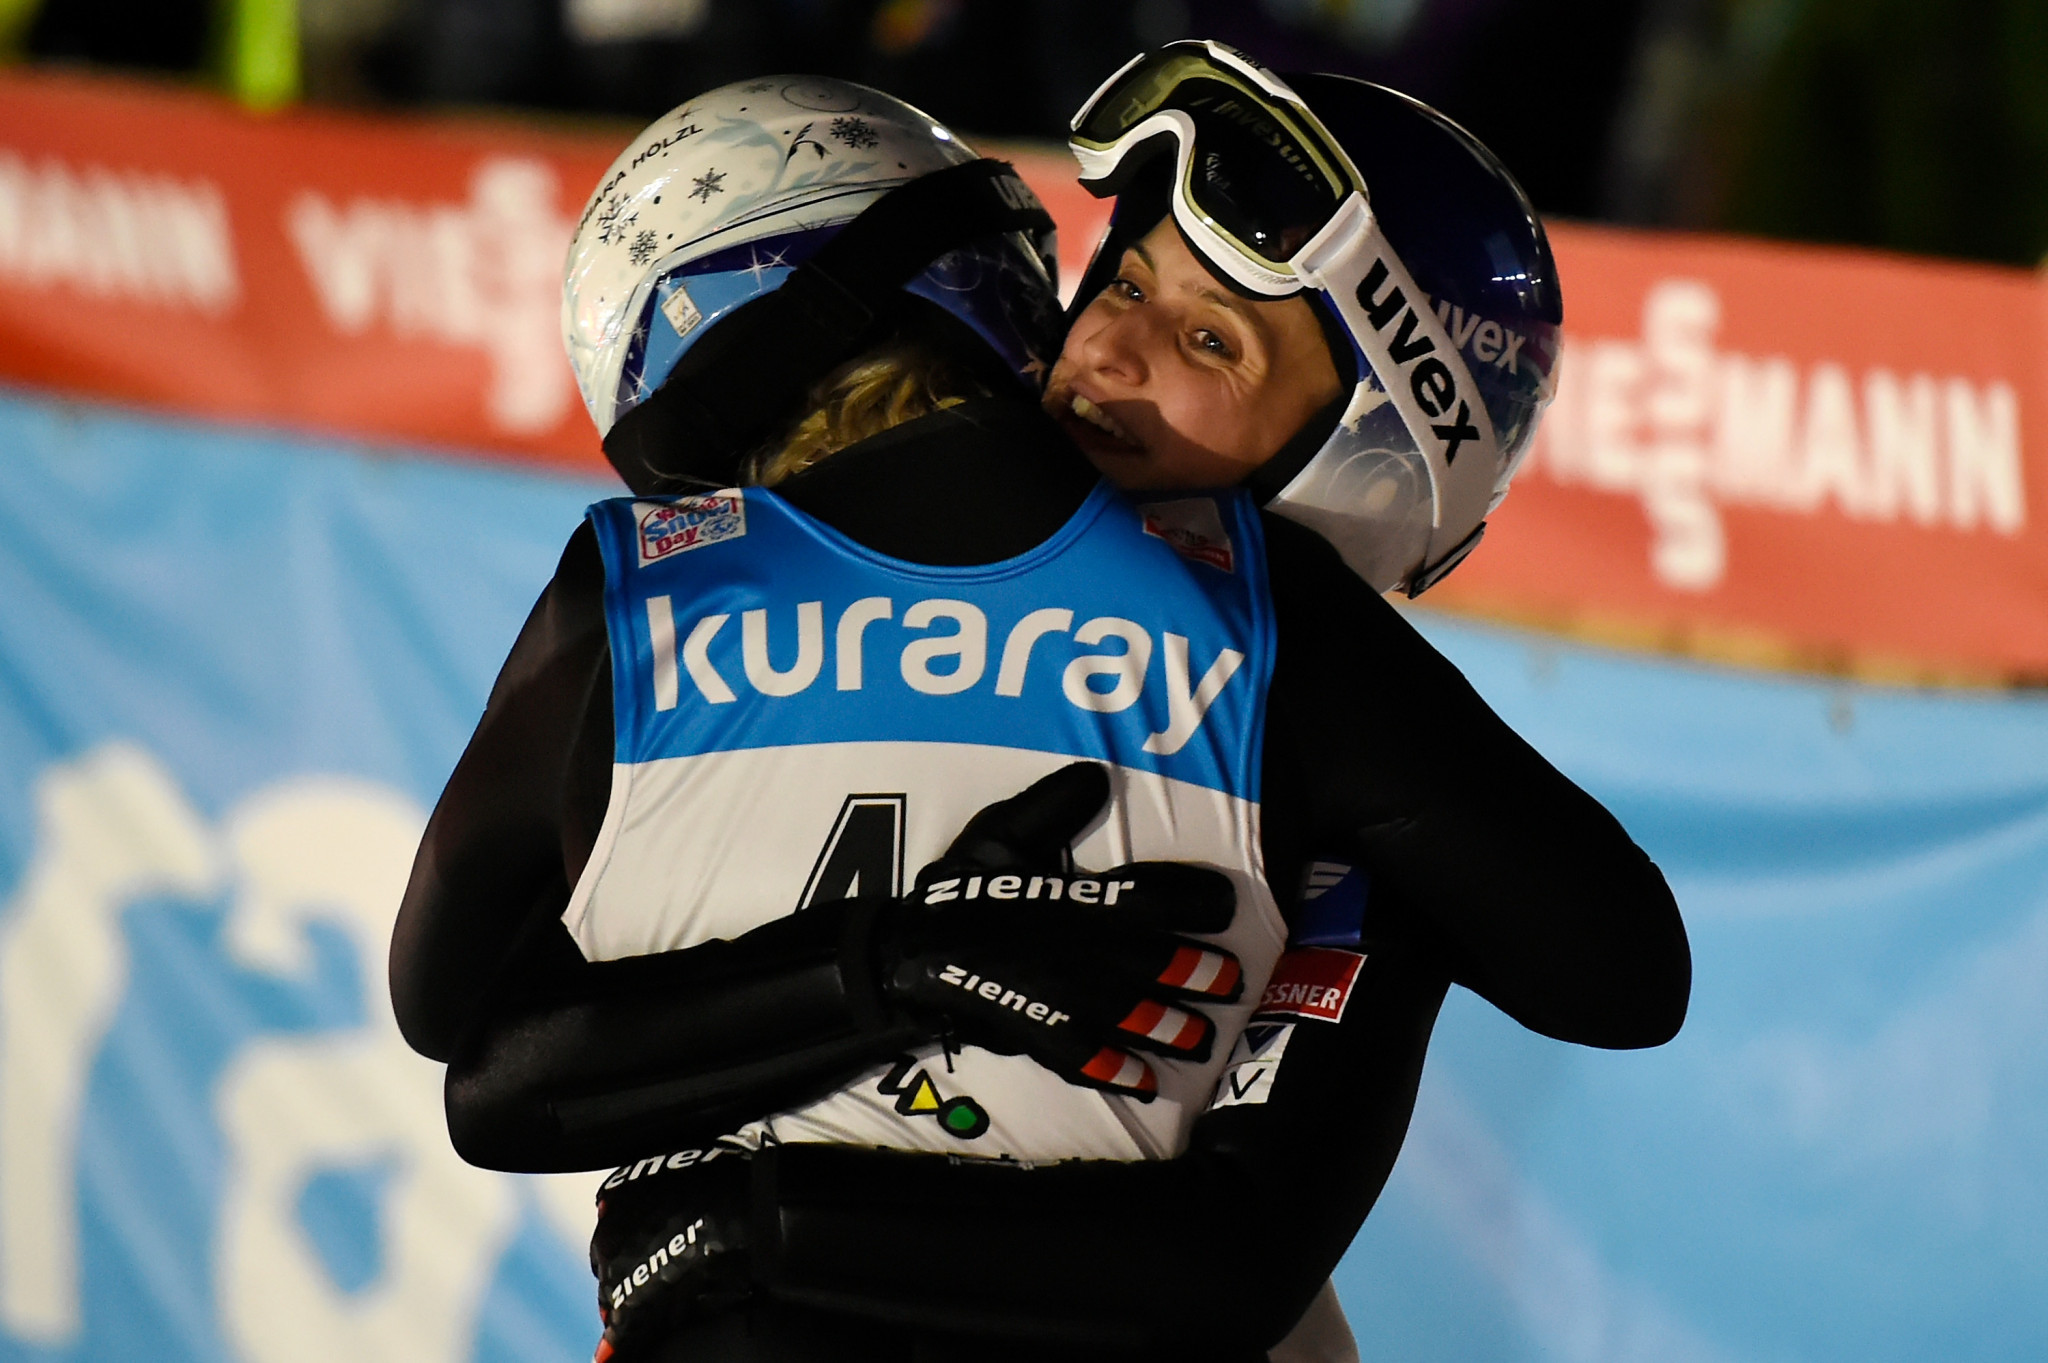 Austria narrowly beat hosts Slovenia in women's FIS Ski Jumping World Cup team event